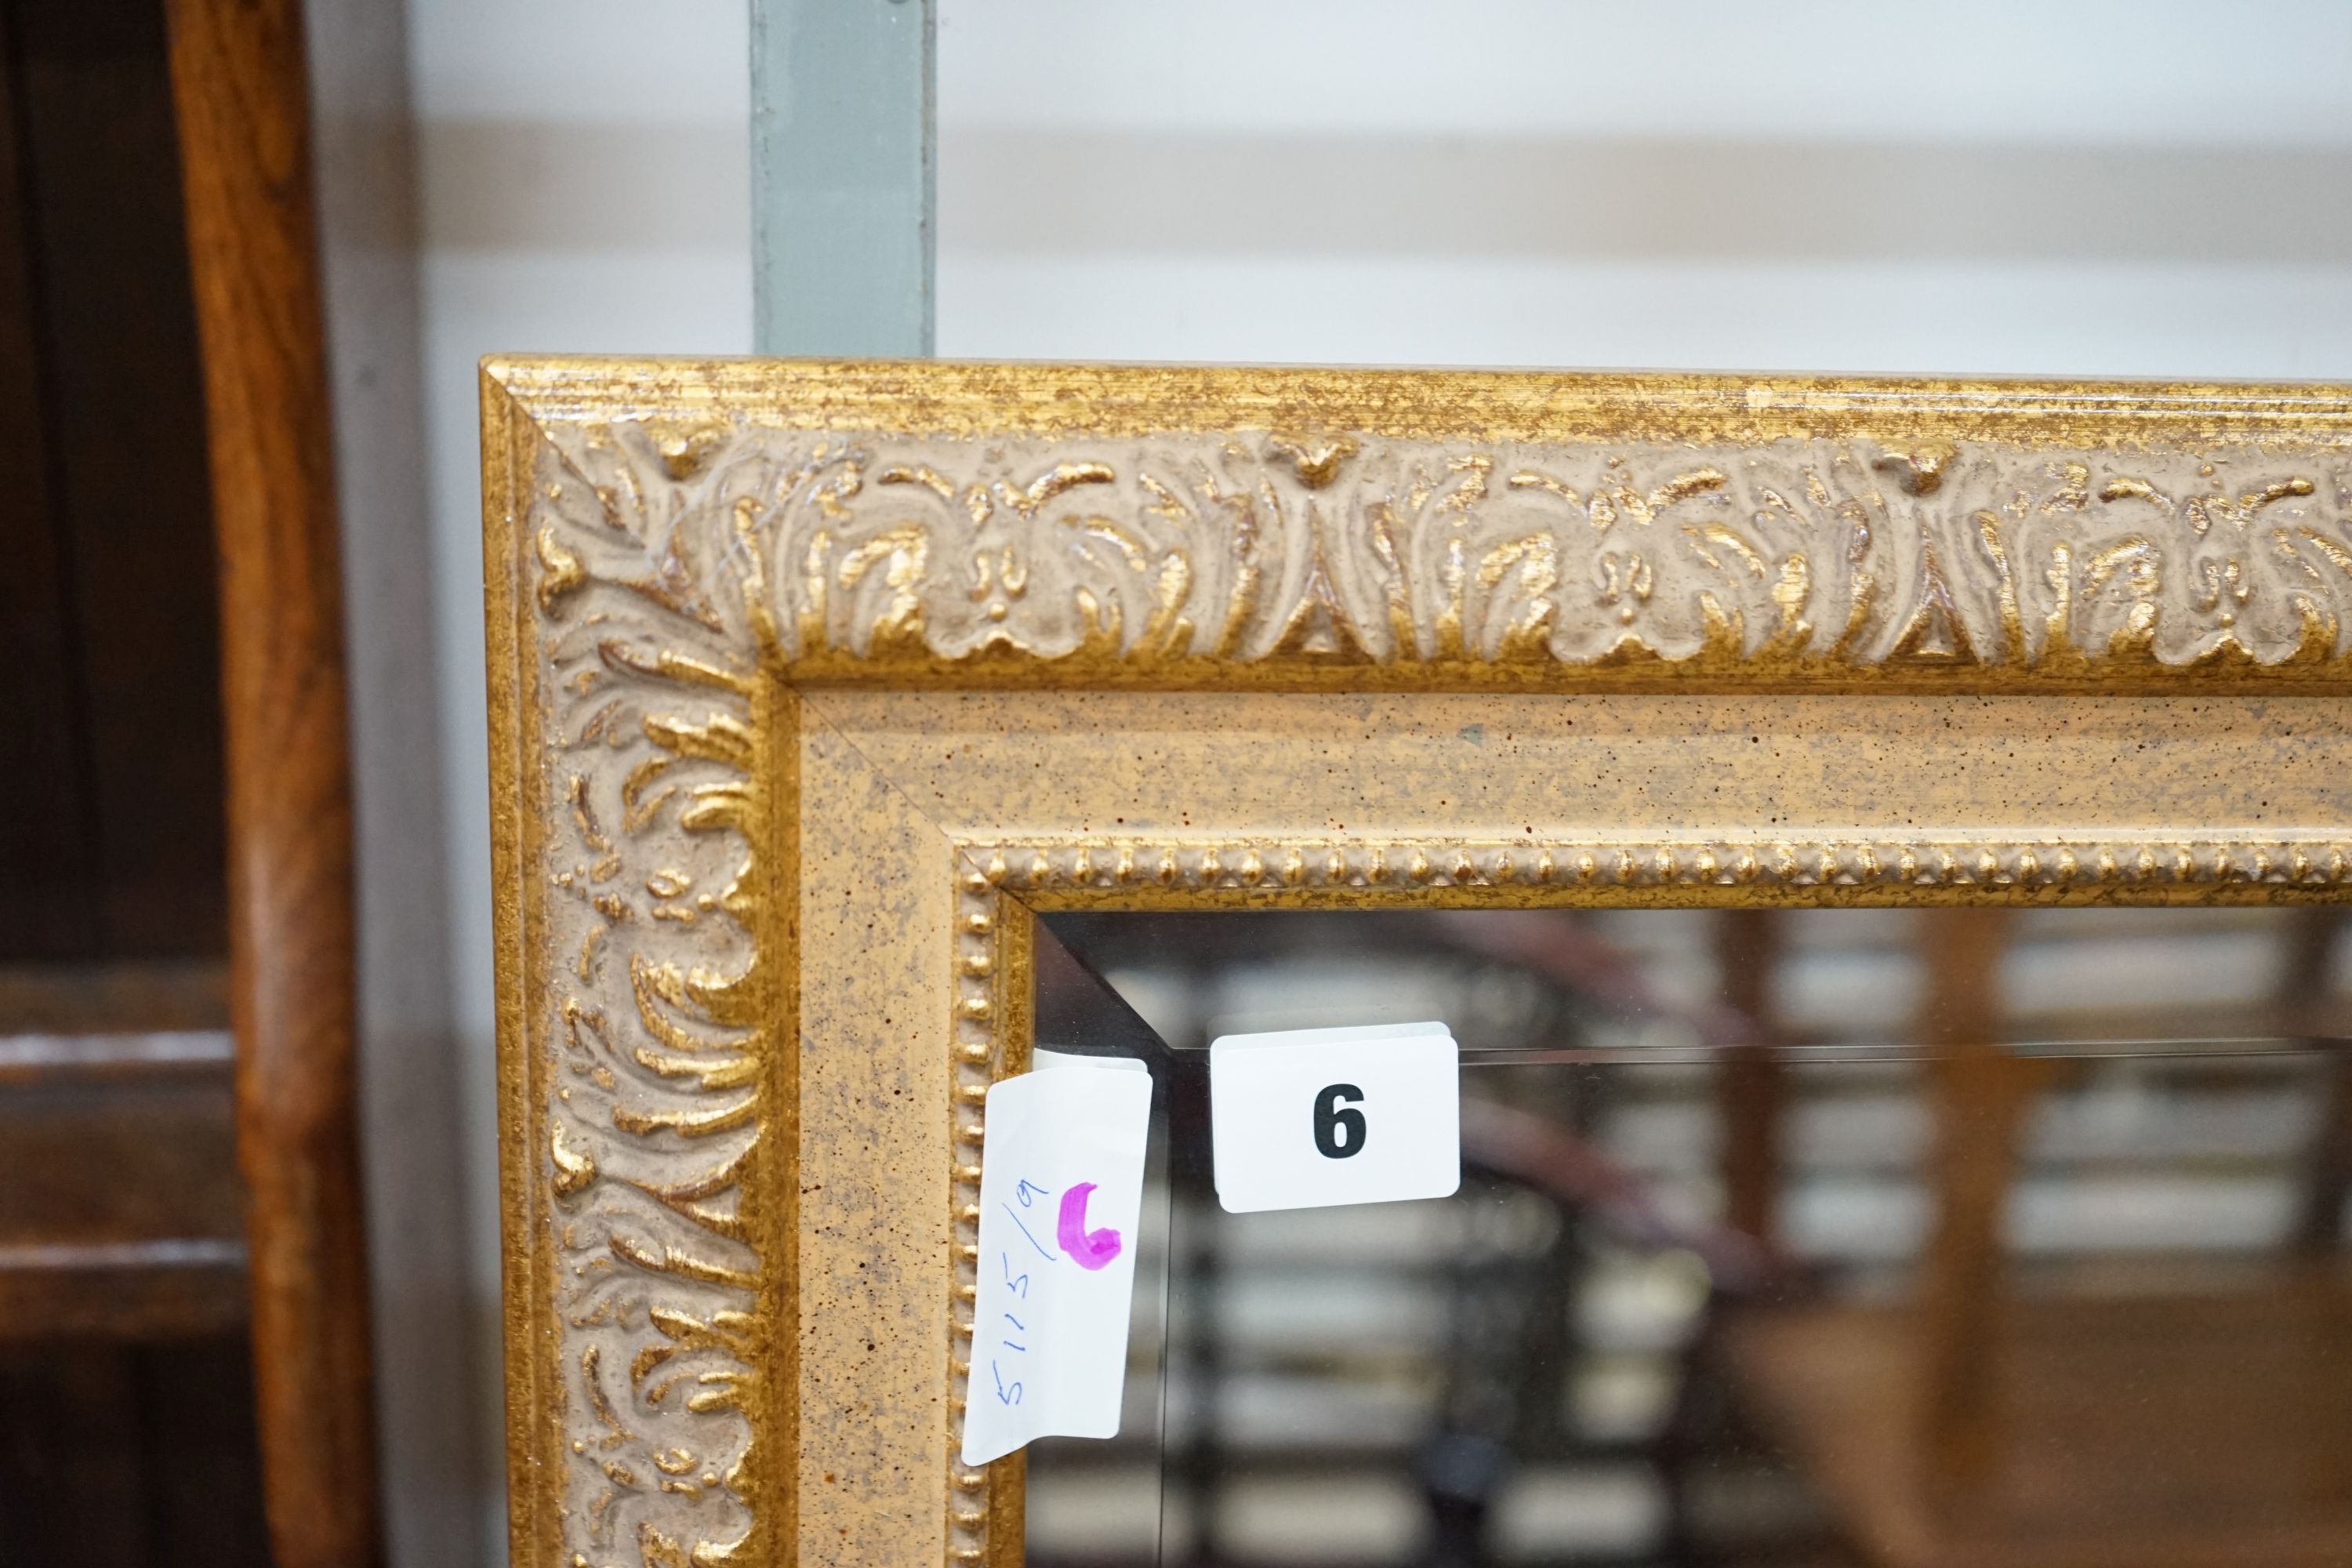 A reproduction gilt framed wall mirror, width 103cm, height 135cm